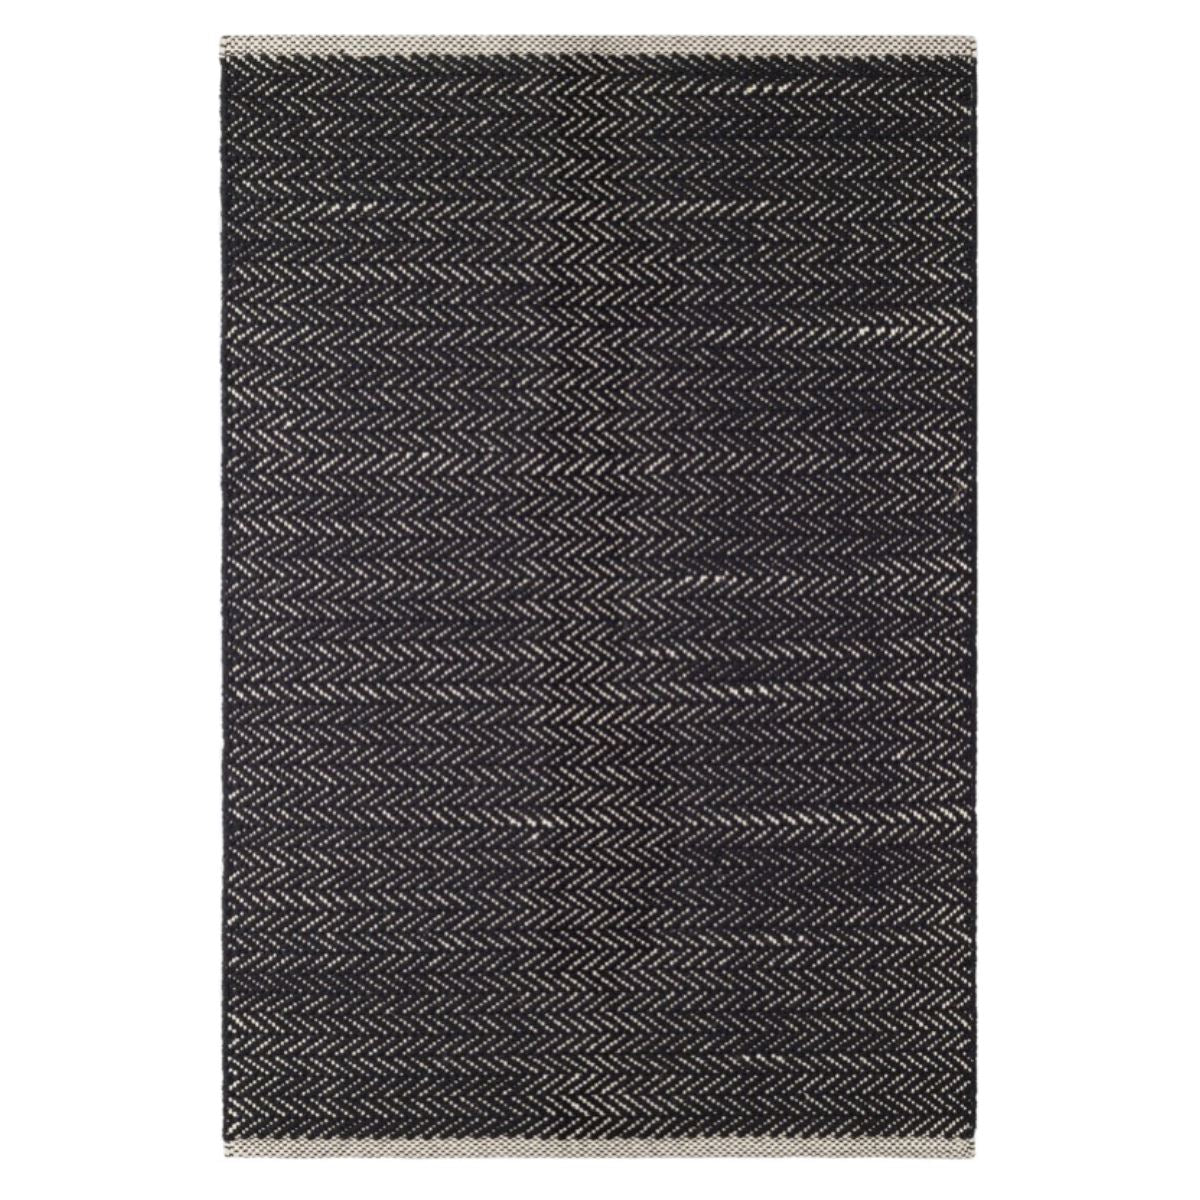 Herringbone Black Woven Cotton Rug. Top view.